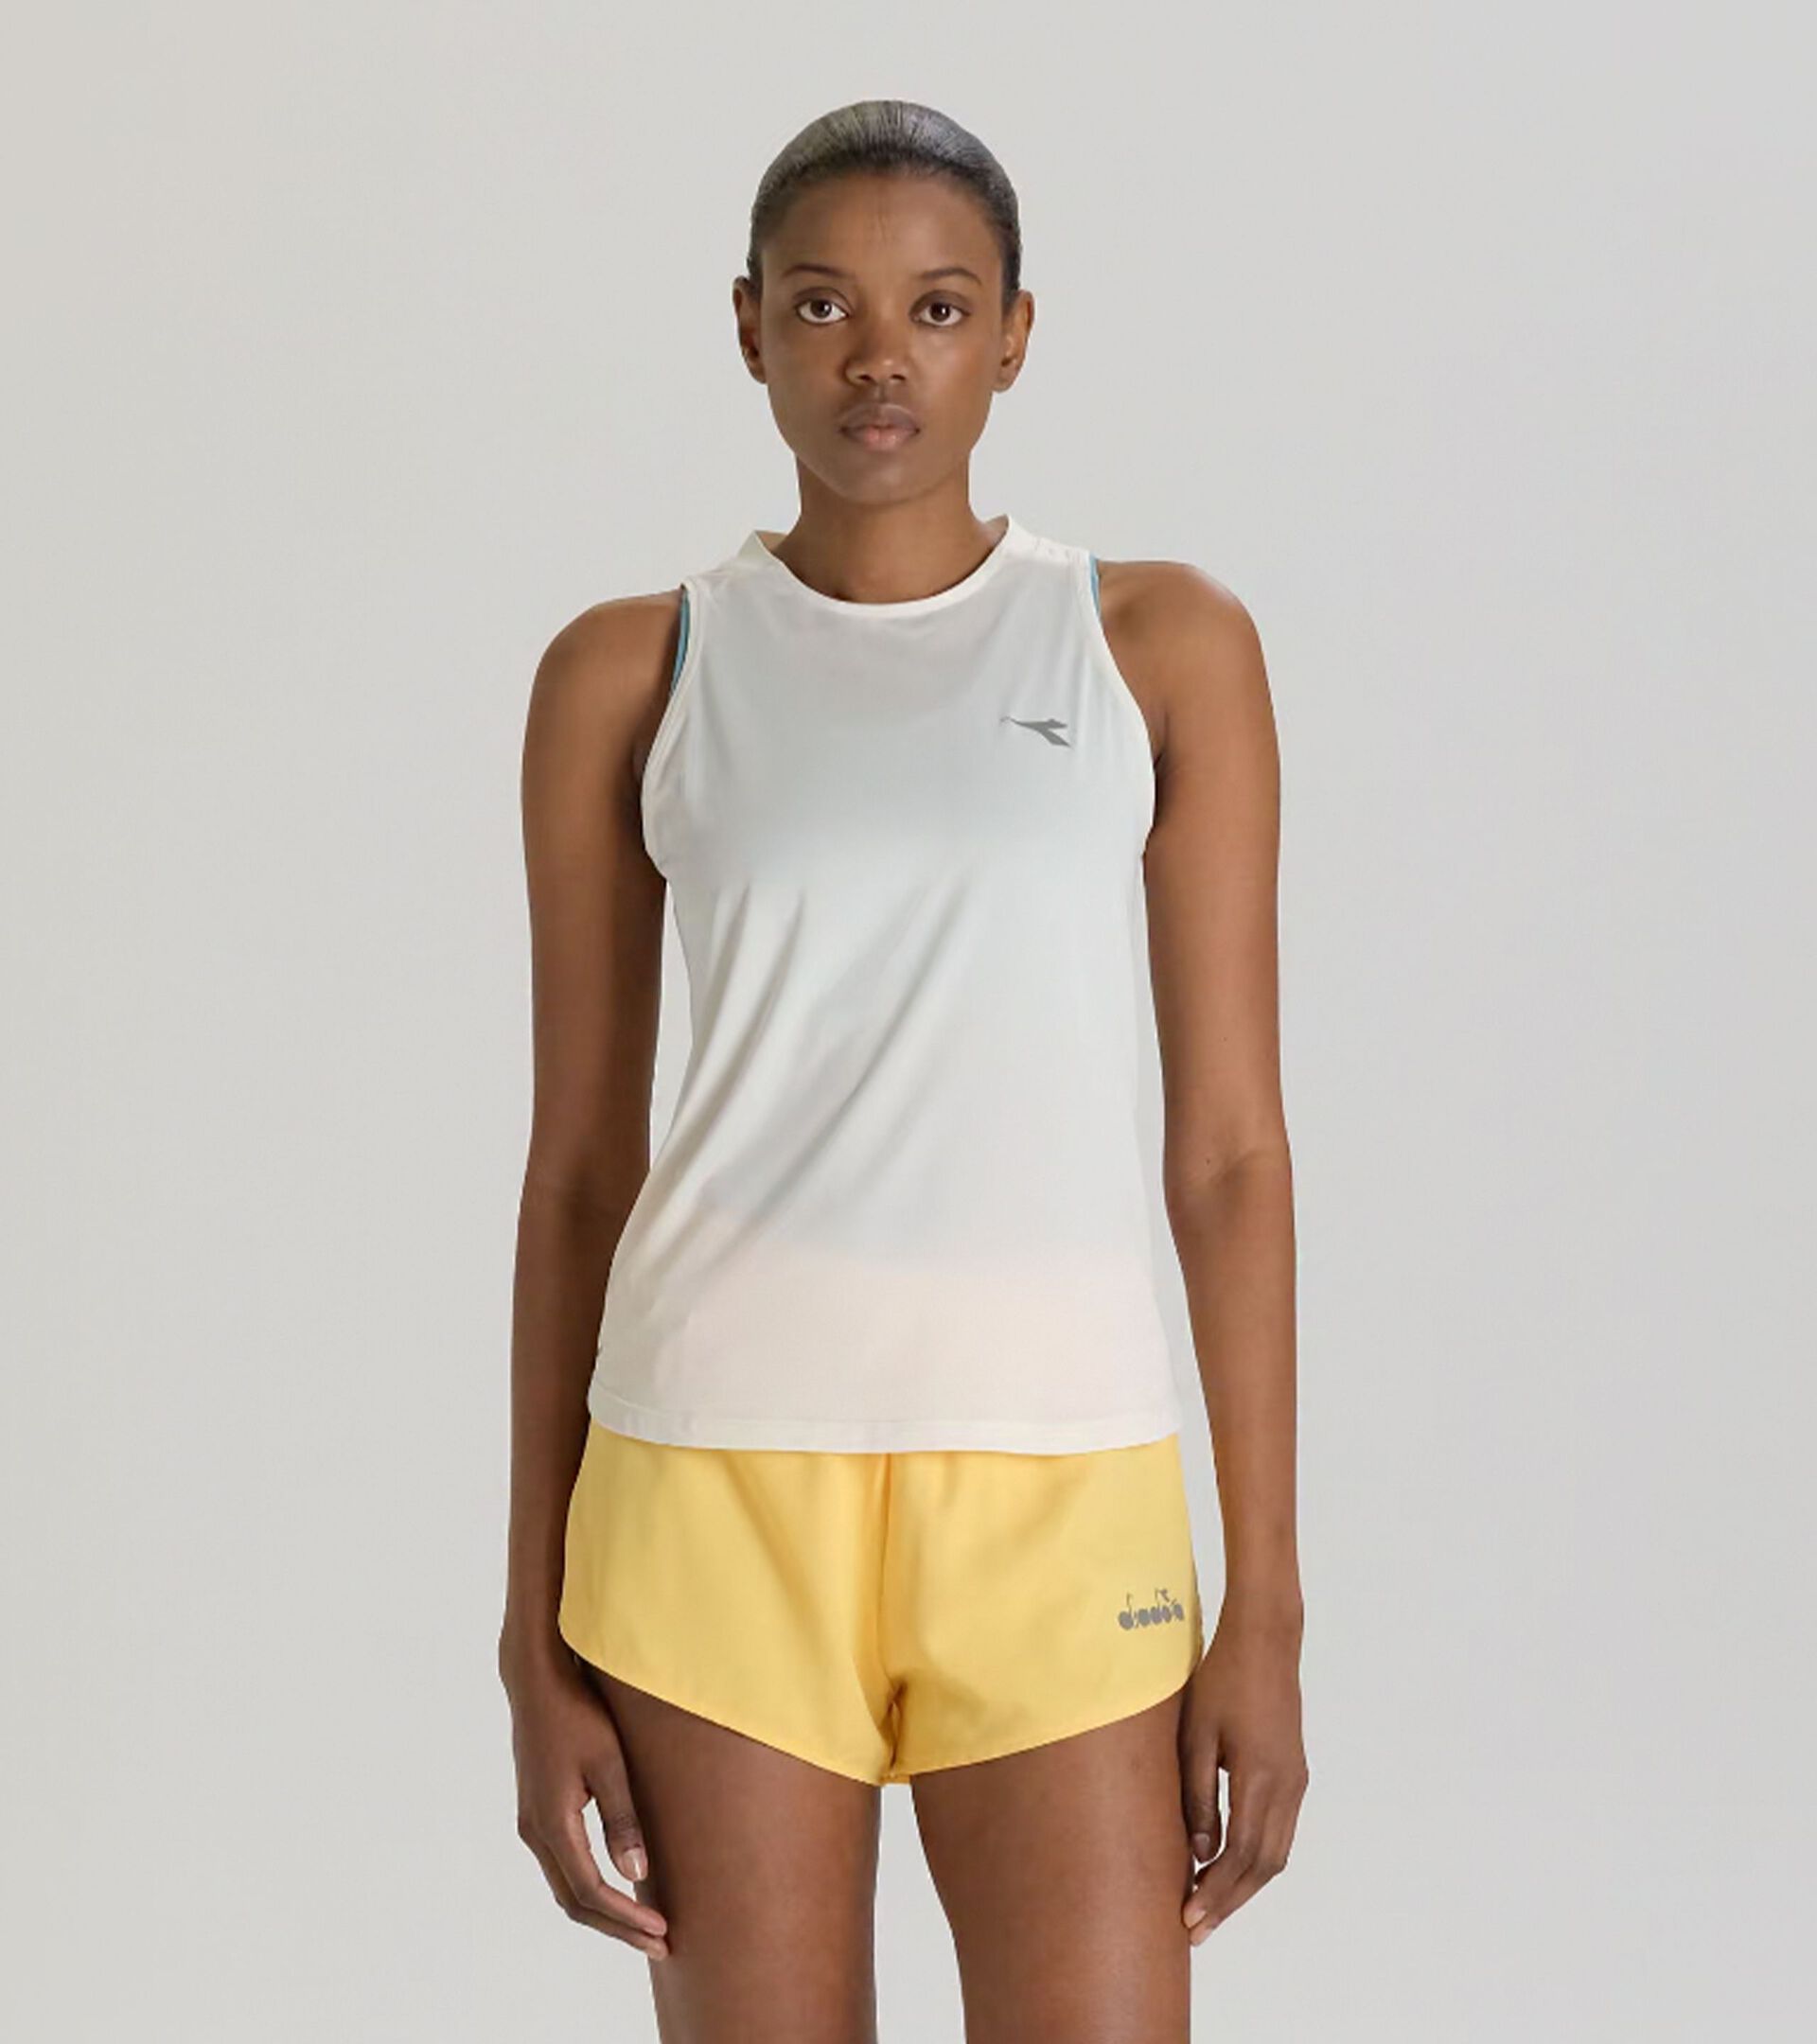 Camiseta sin mangas de running - Tejido ligero - Mujer
 L. SUPER LIGHT TANK BLANCO MURMURAR - Diadora